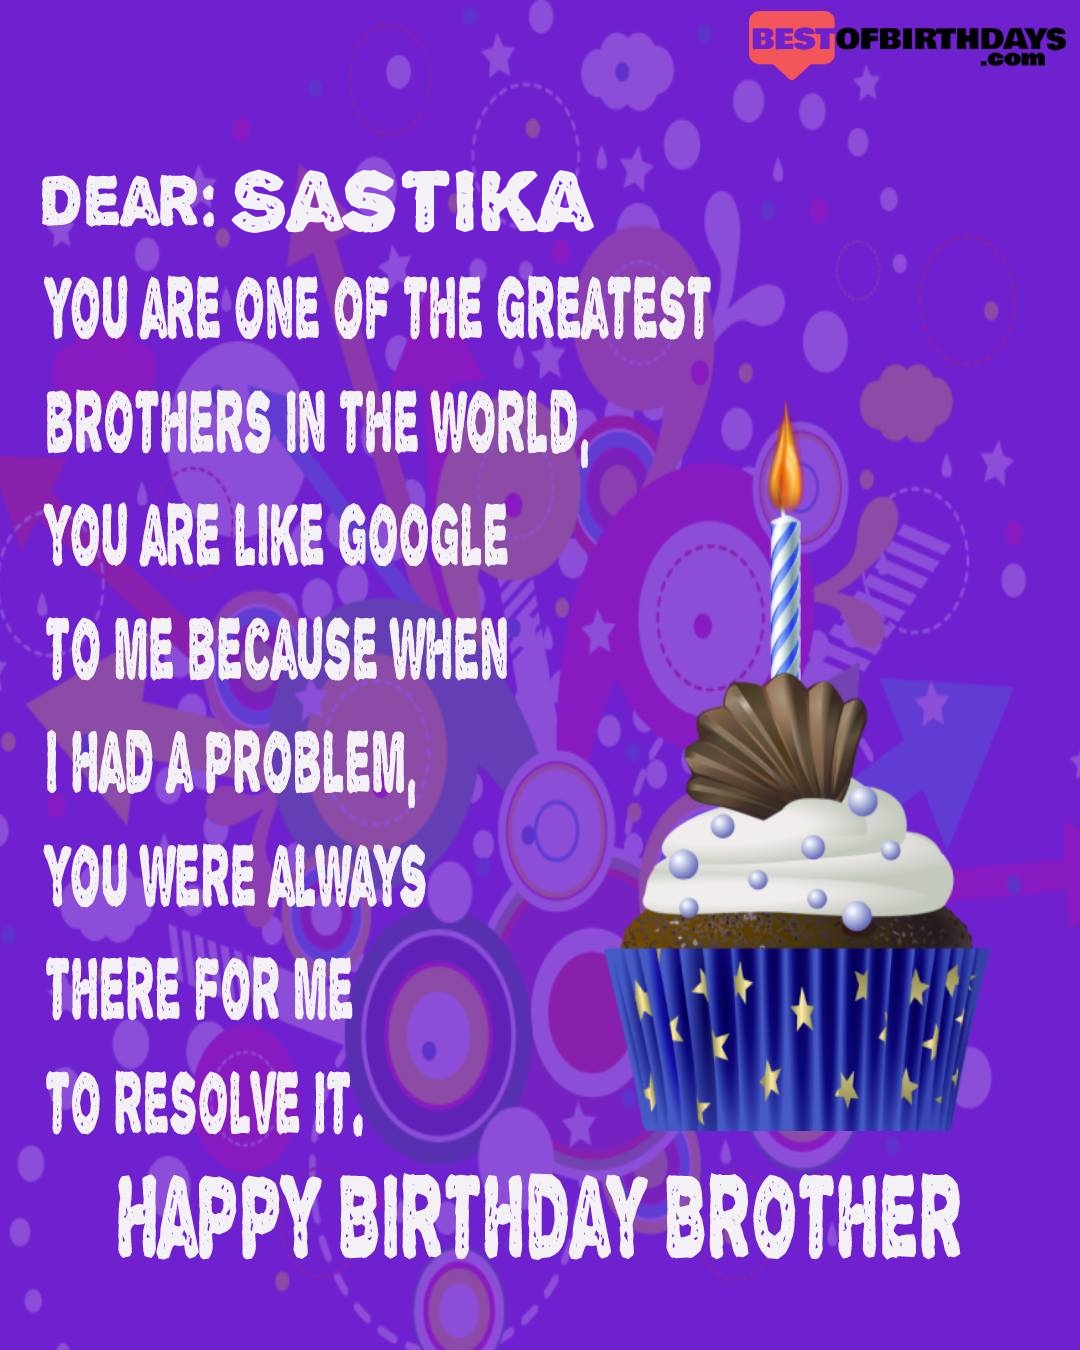 Happy birthday sastika bhai brother bro